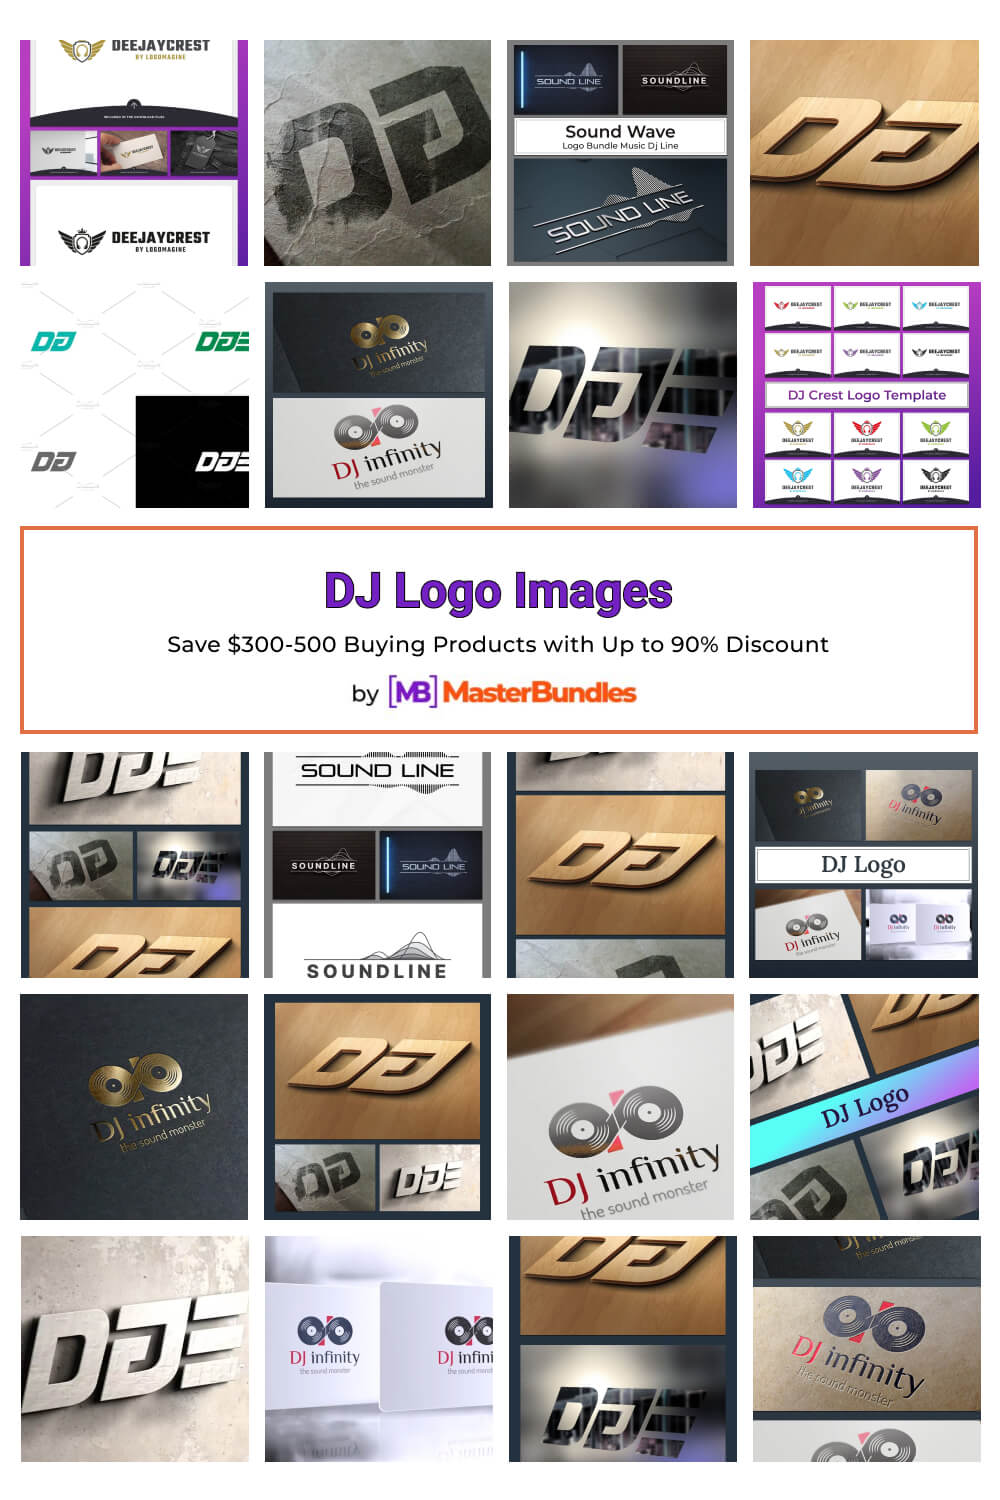 dj logo images pinterest image.